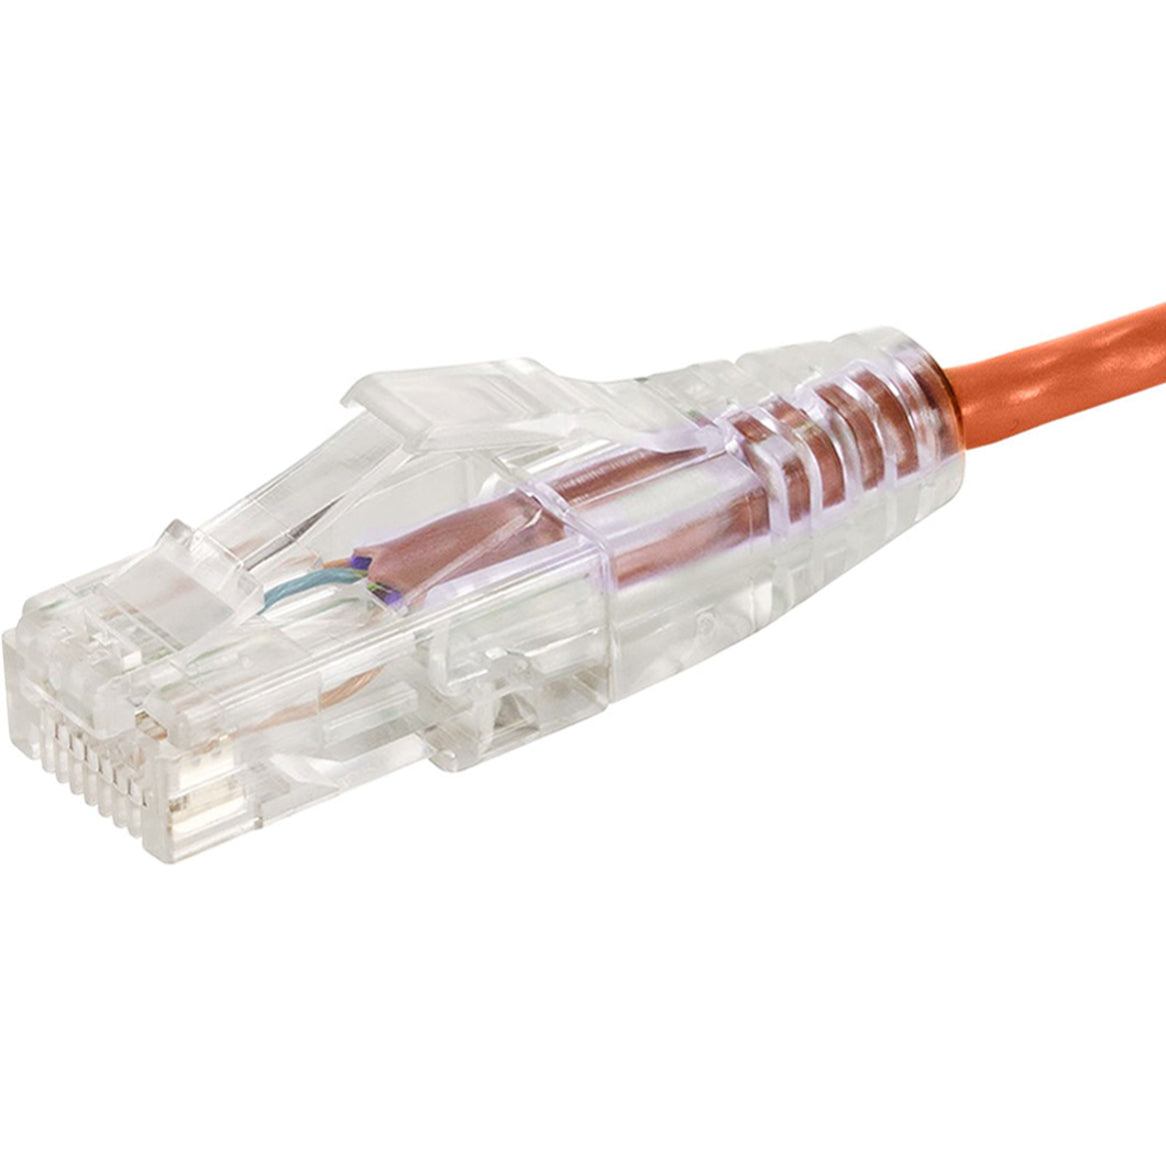 Monoprice 14811 SlimRun Cat6 28AWG UTP Ethernet Network Cable, 5ft Orange